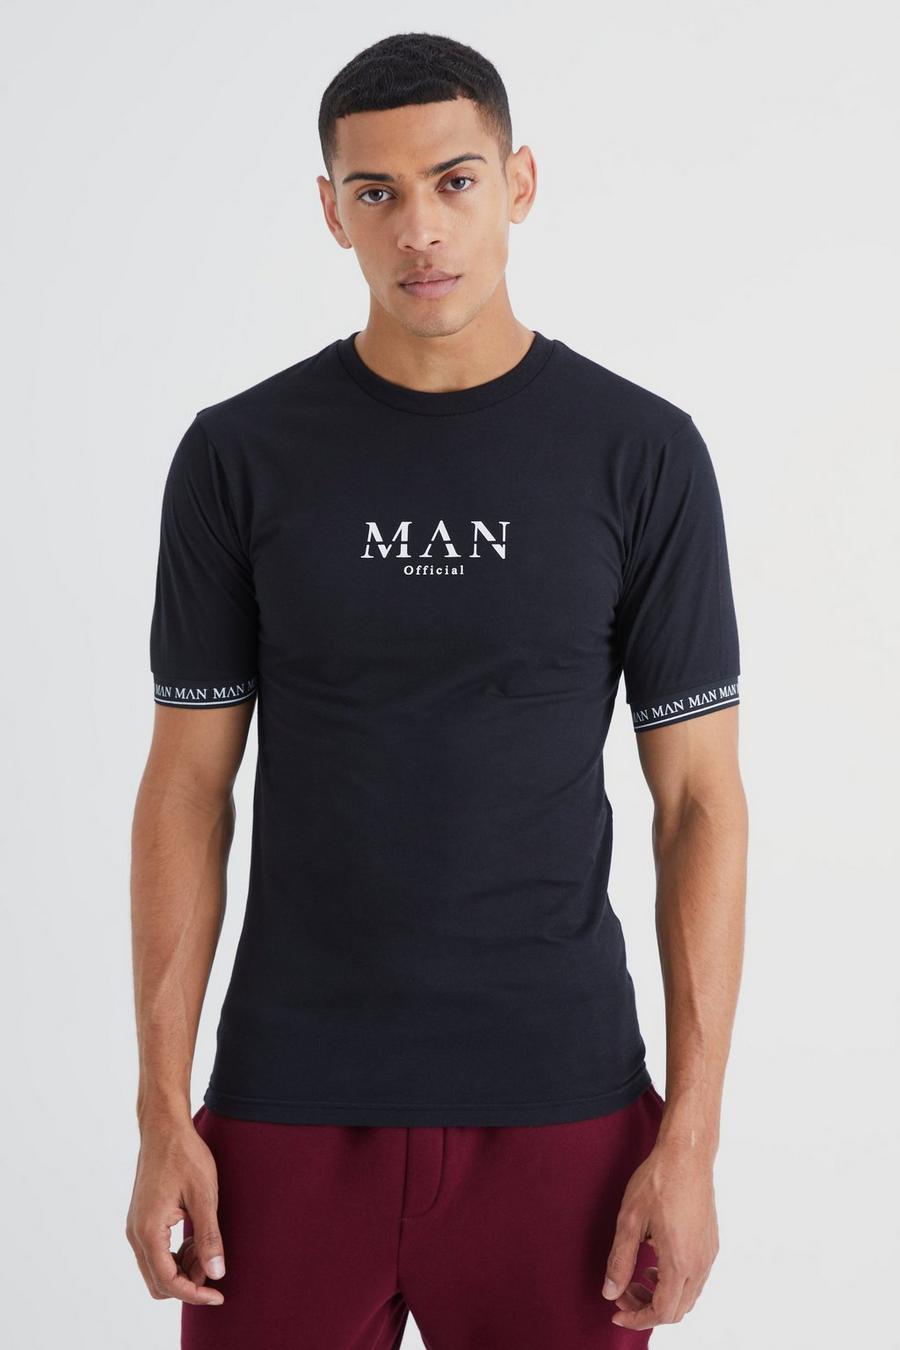 Muscle-Fit Man Gold T-Shirt, Black